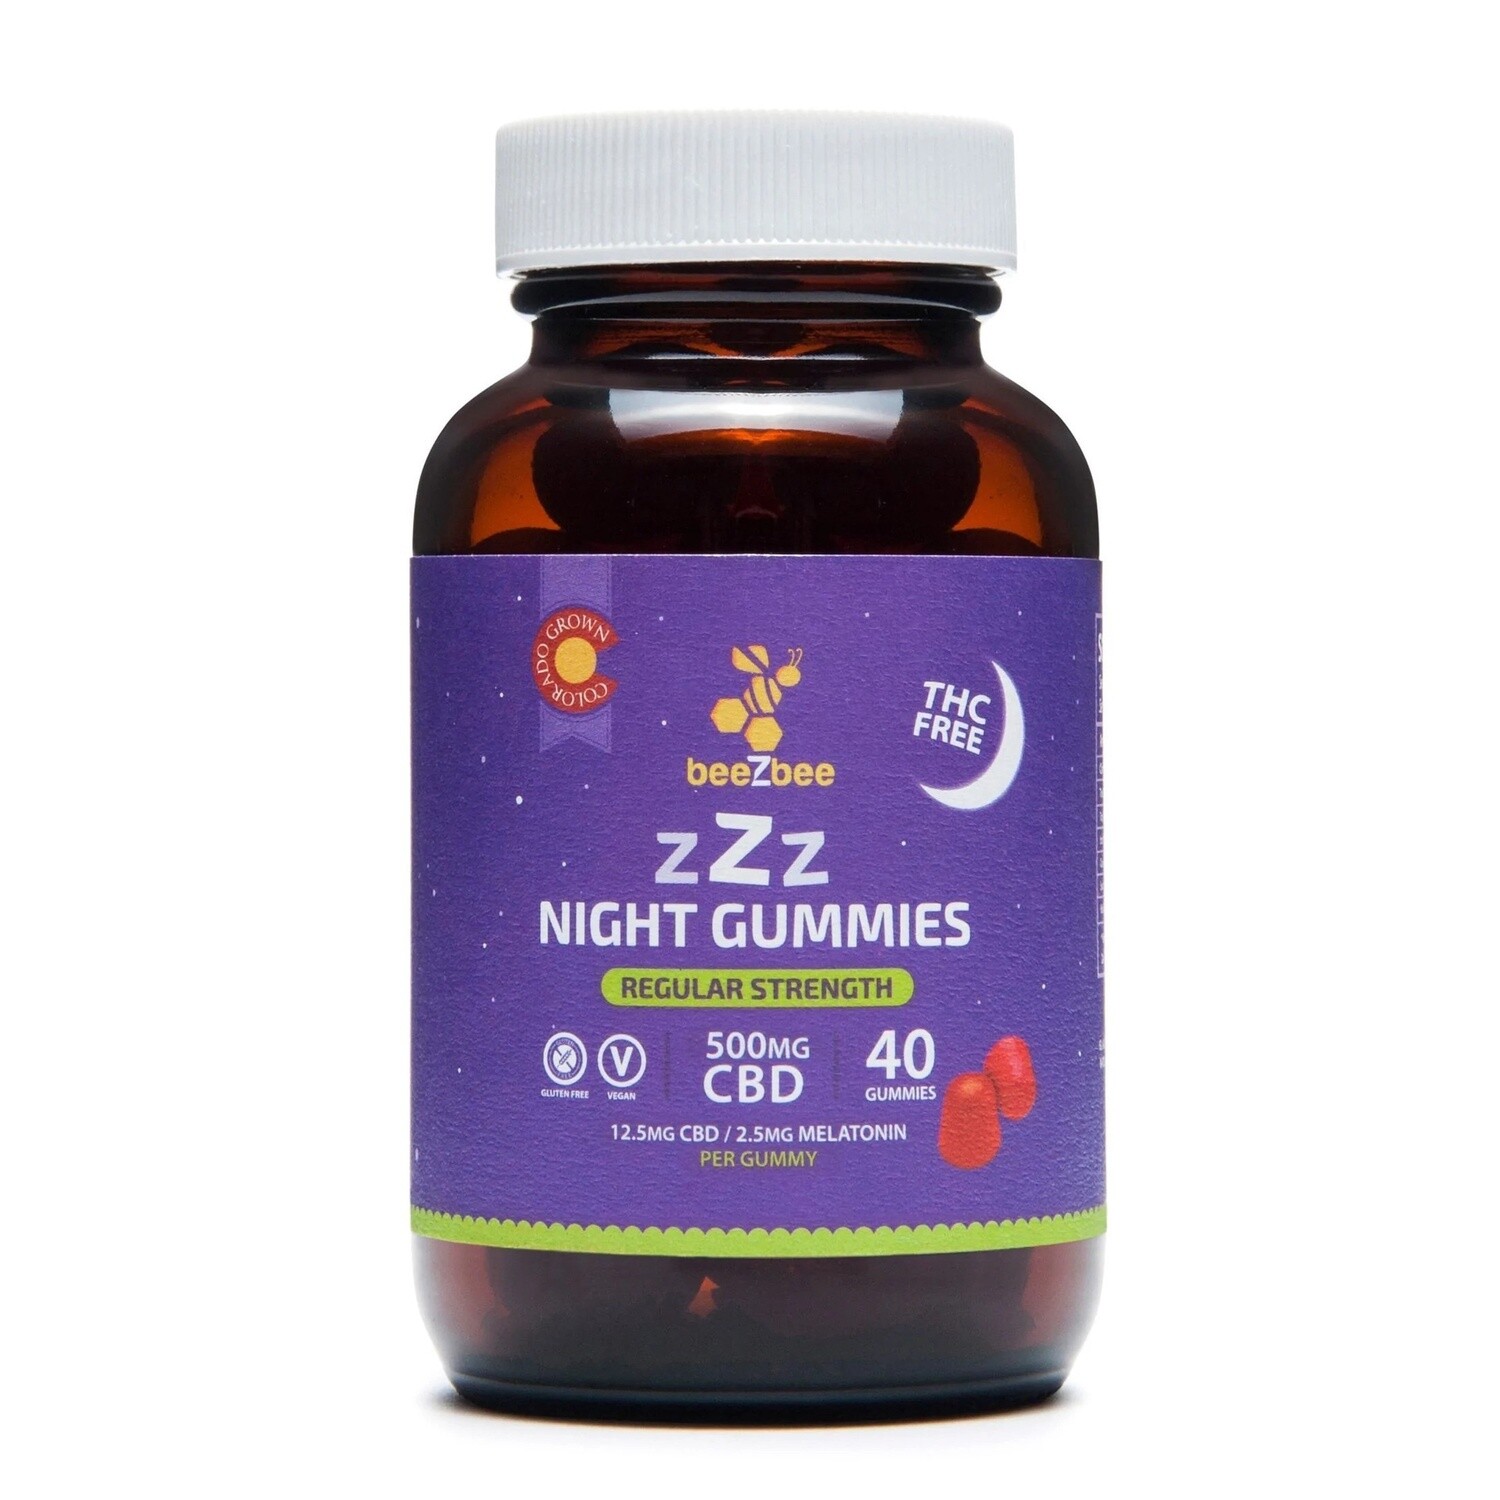 zZz CBD Night Gummies - Regular Strength